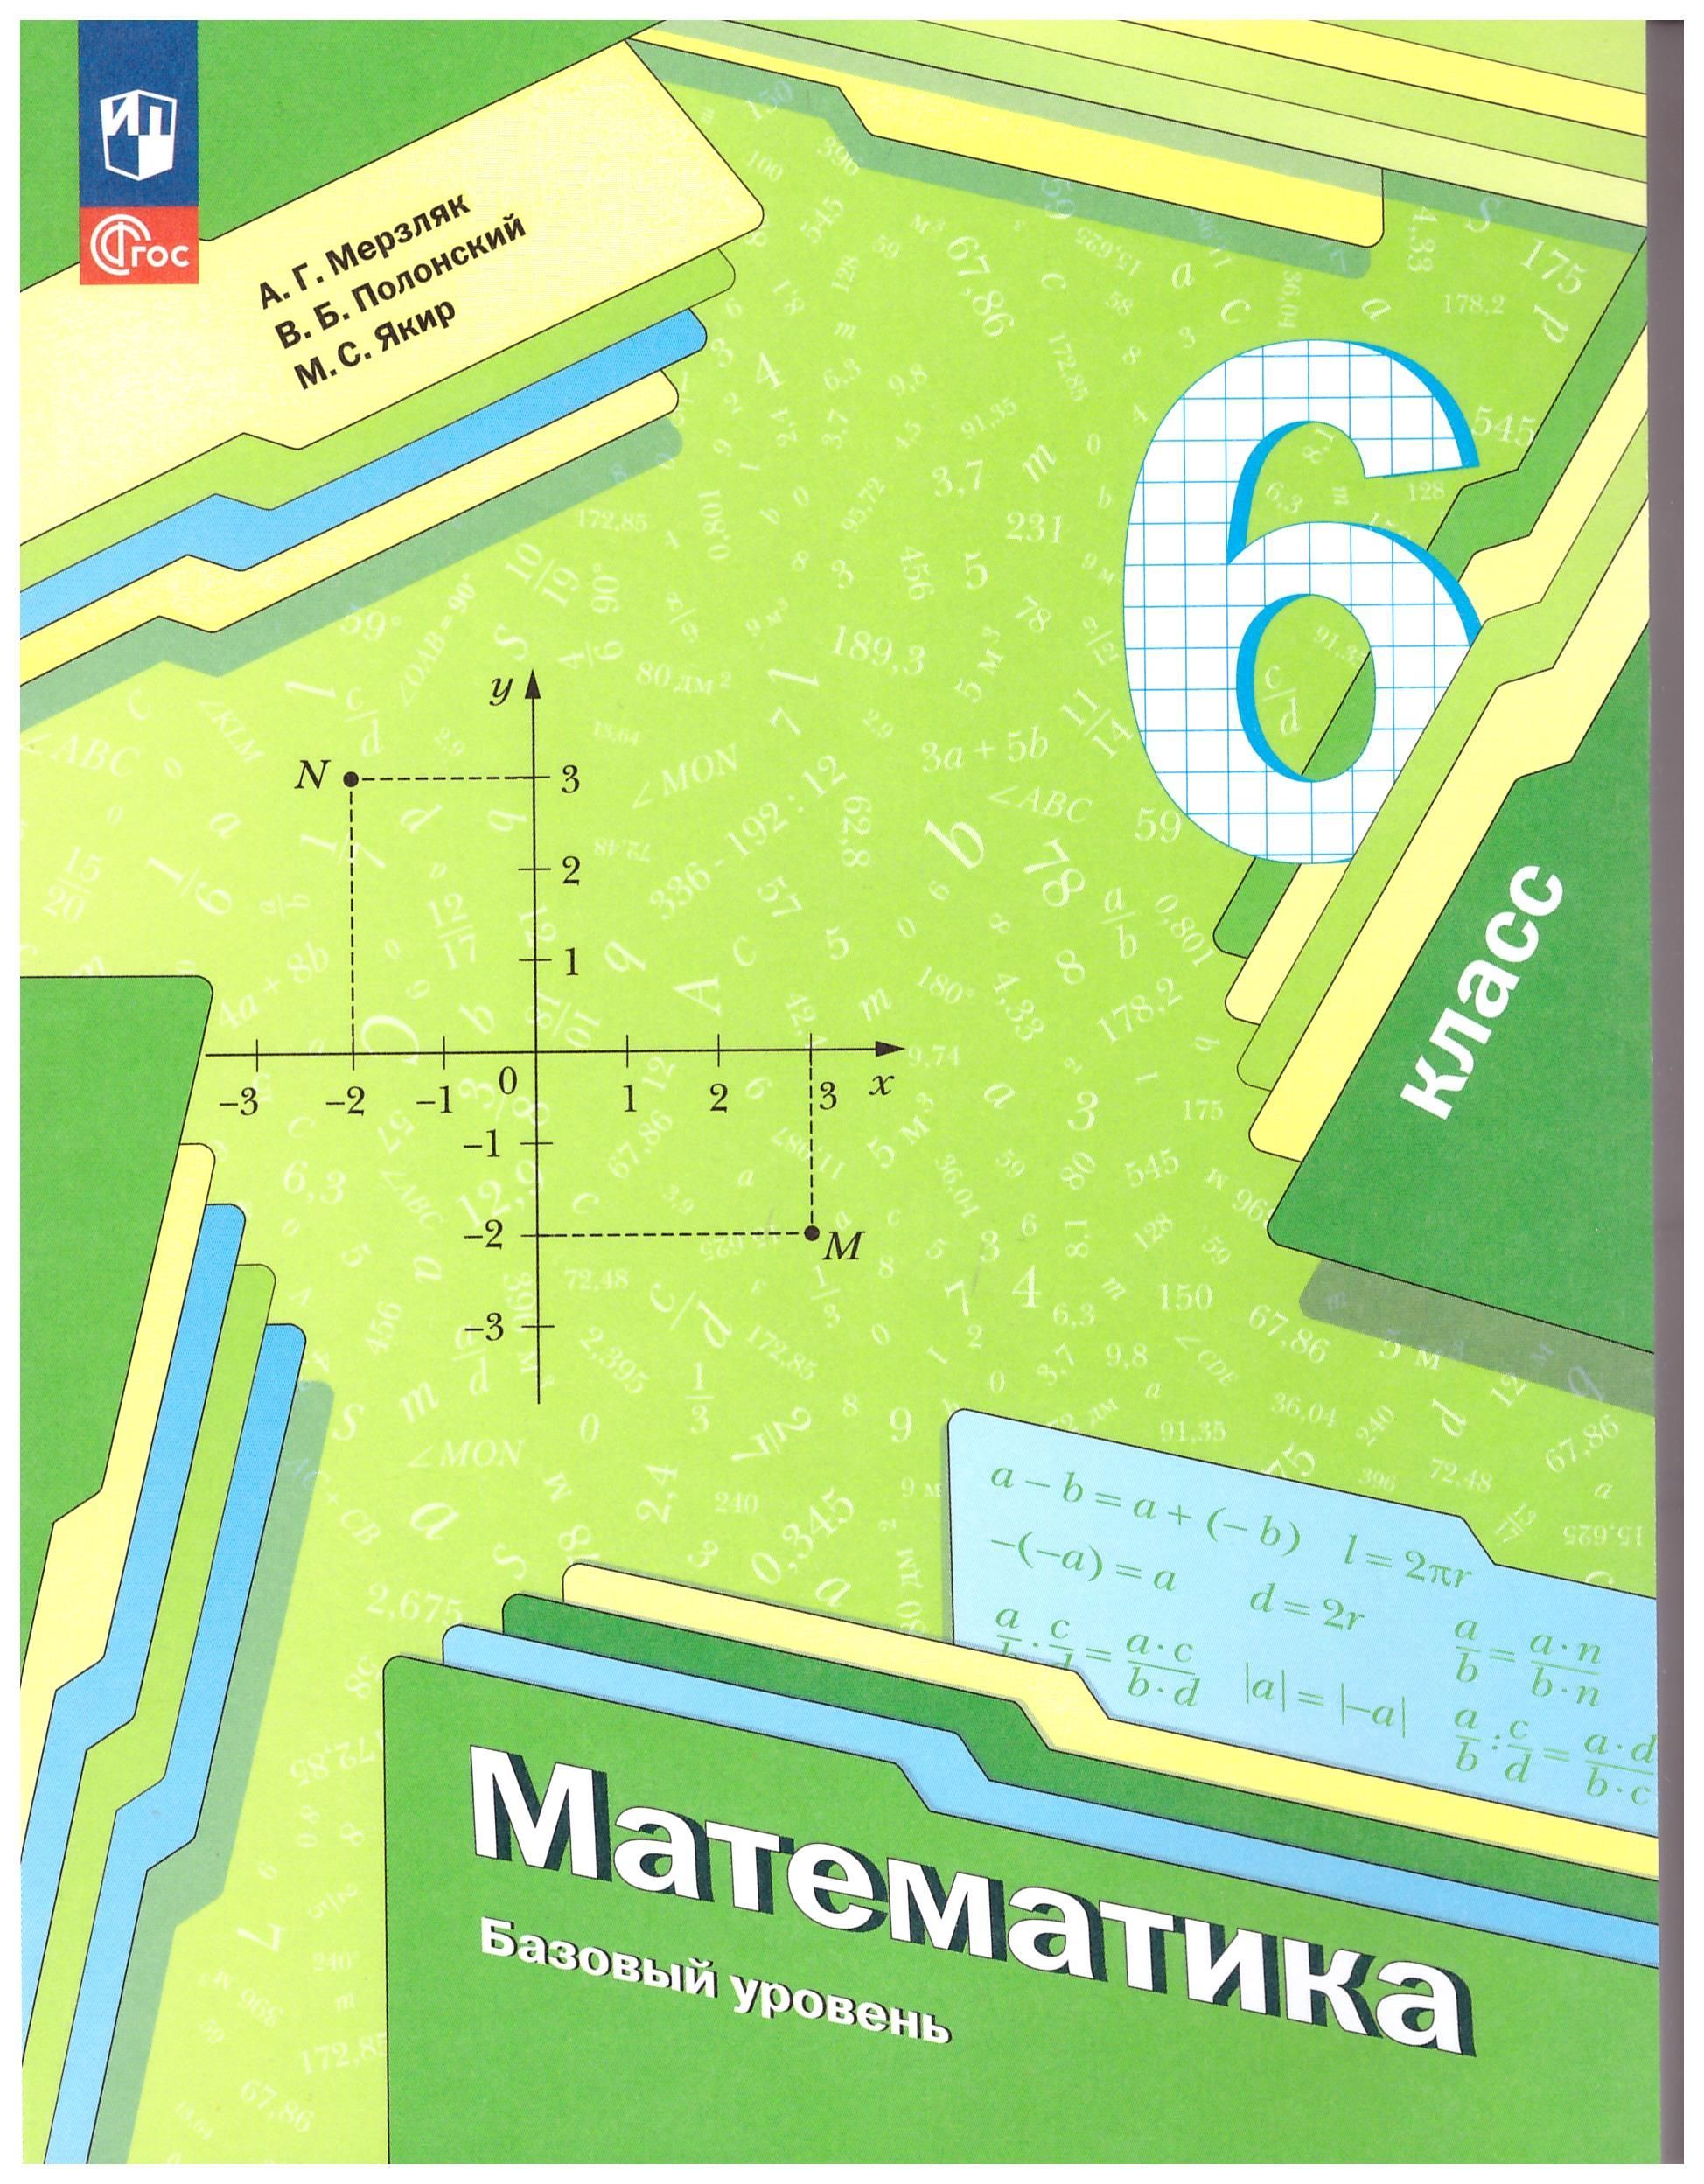 Математика 6 класс легко. Математика 6 класс Мерзляк. Учебник по математике 6 класс Мерзляк обложка. Учебник учебник математики 6 класс Мерзляк.